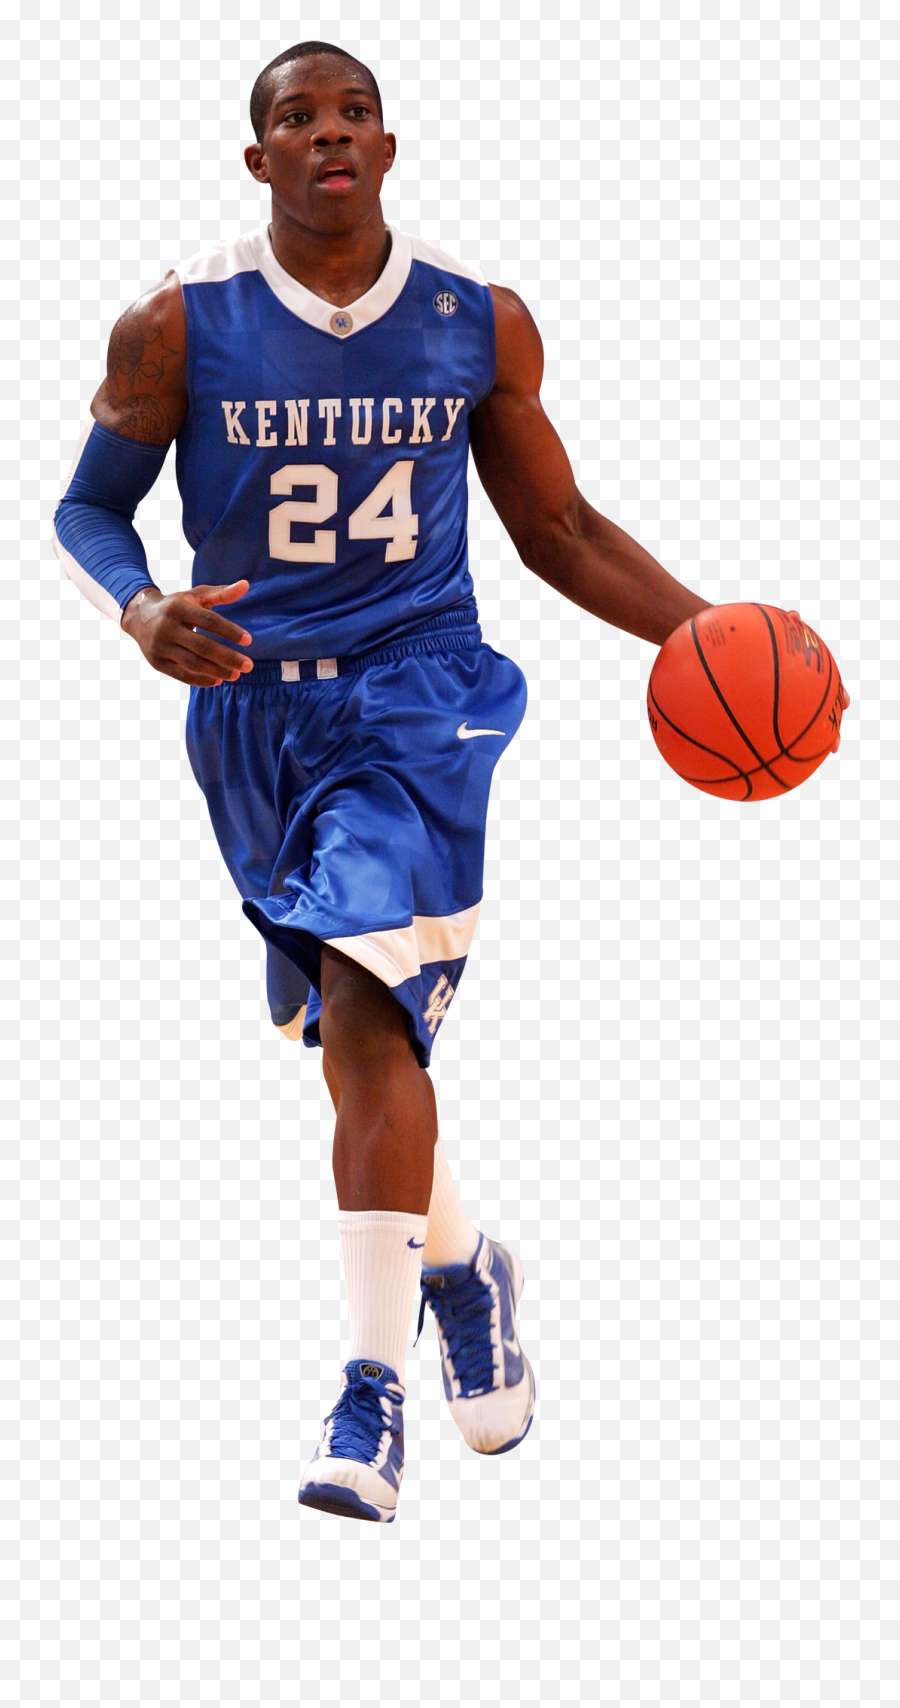 Kentucky Basketball Player Png - College Basketball Players Transparent,Basketball Players Png